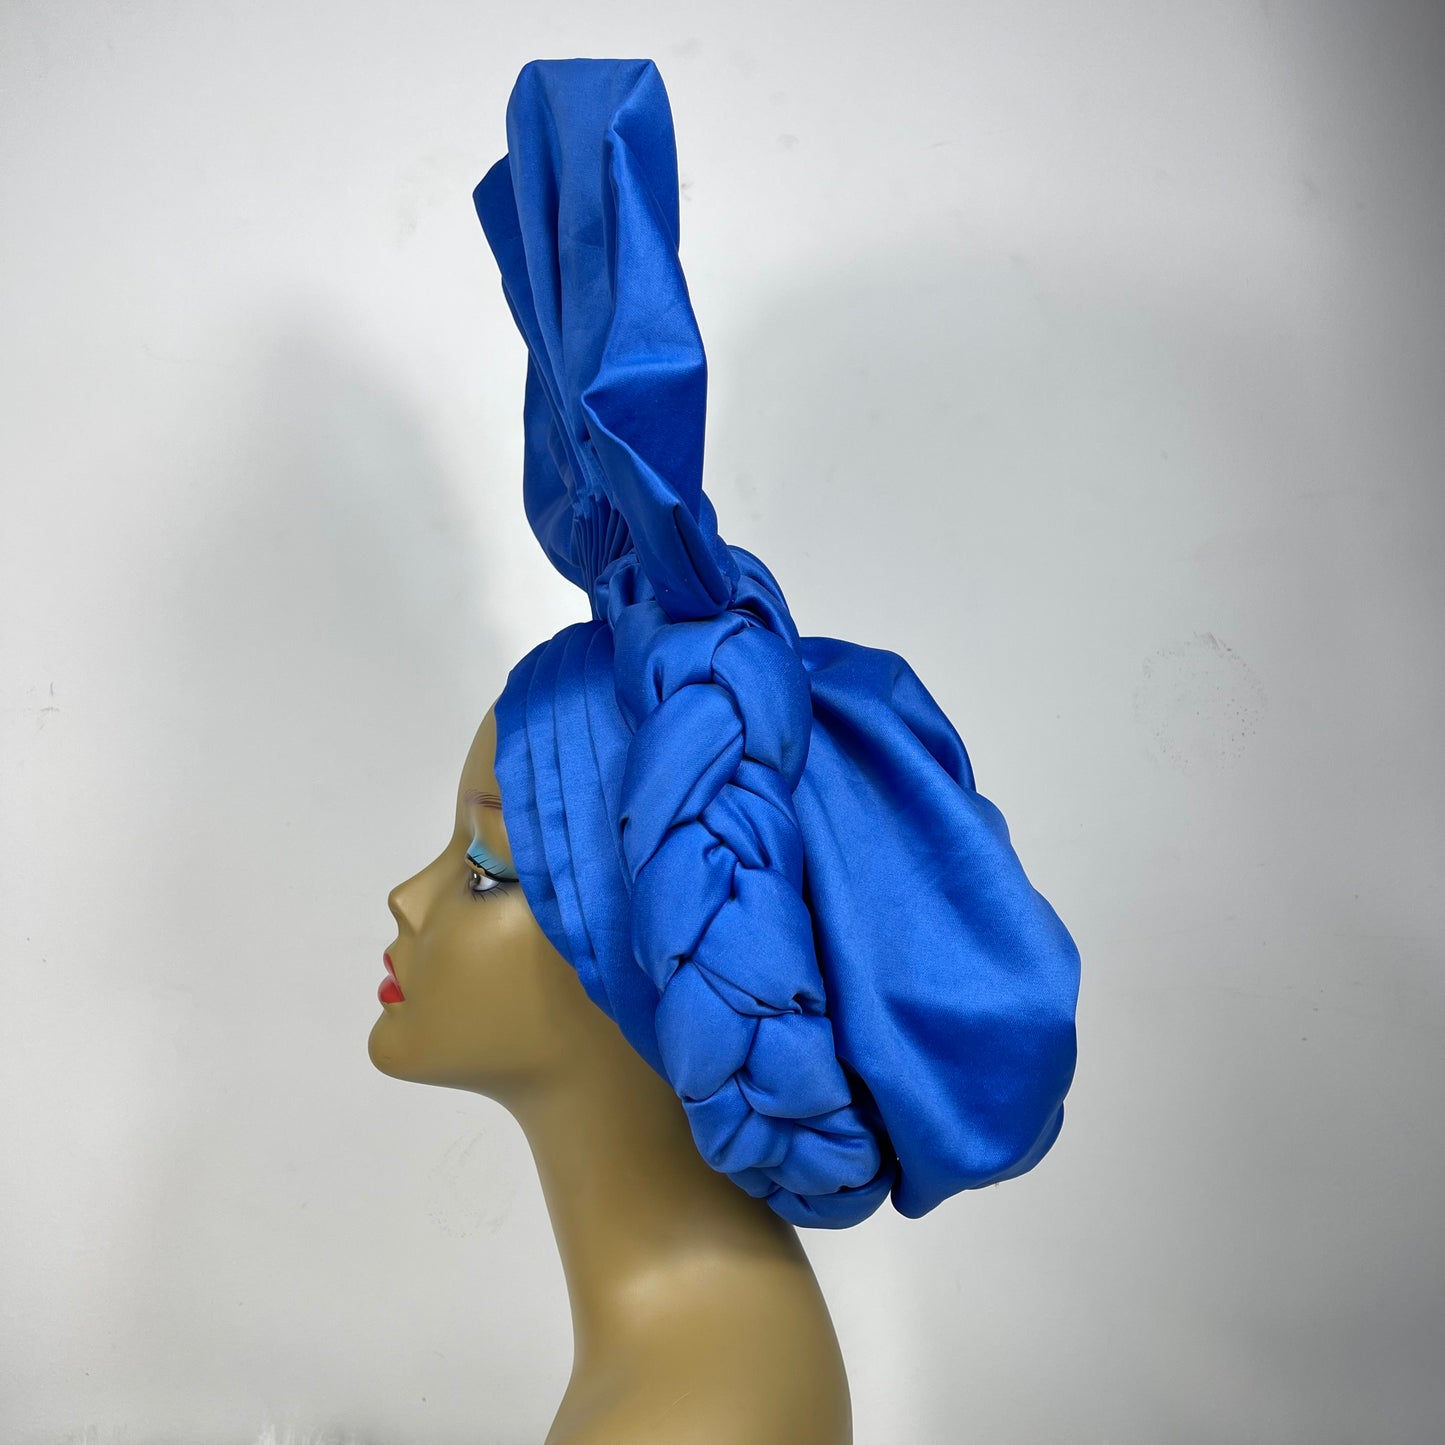 Dupion Raw silk Ruffles style head tie | Nigeria pre styled Headwrap |Gele for wedding party | Turban Ready to wear